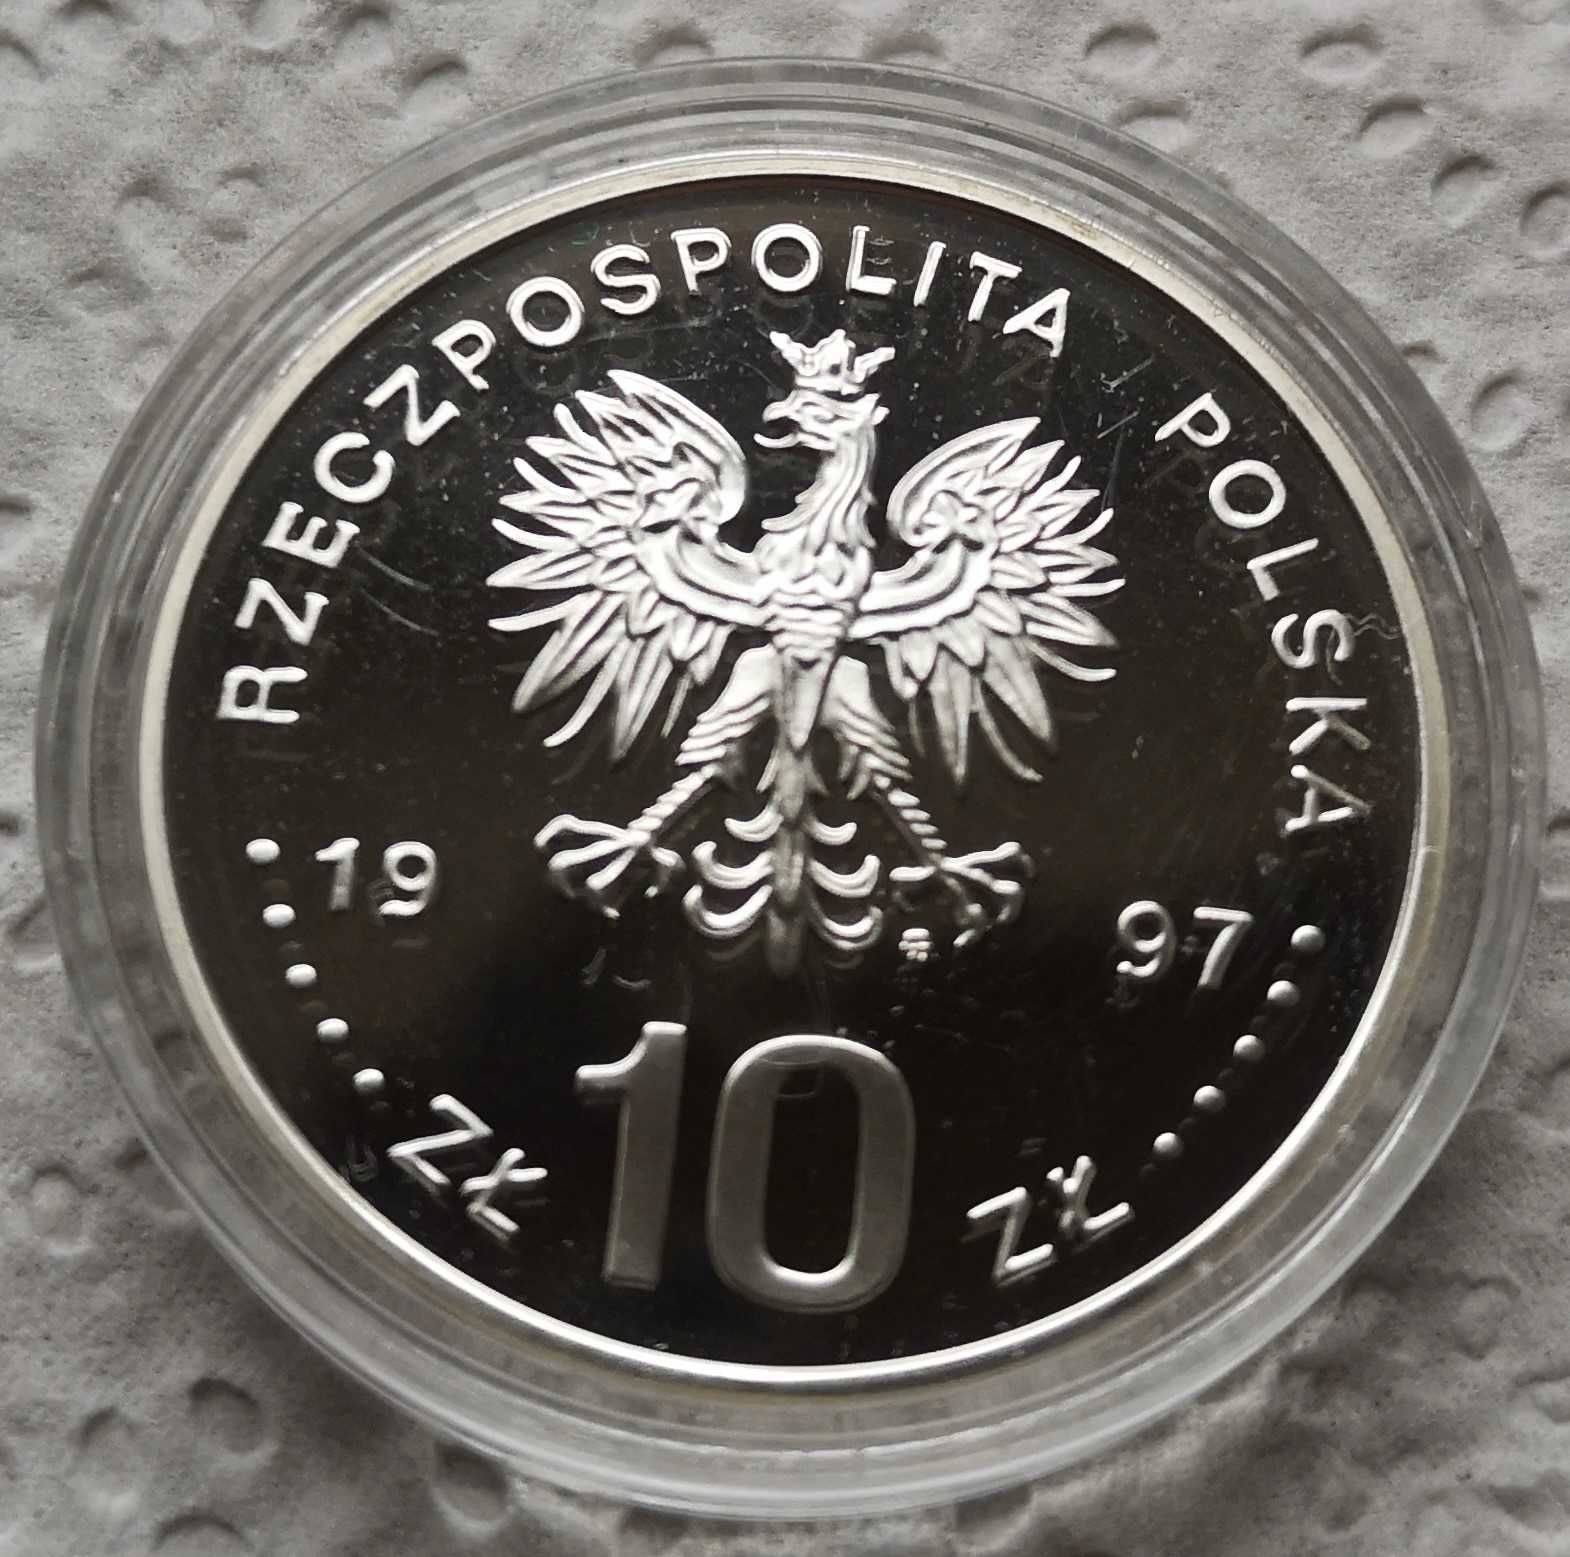 Moneta 10 zł 1997 r. Stefan Batory, popiersie